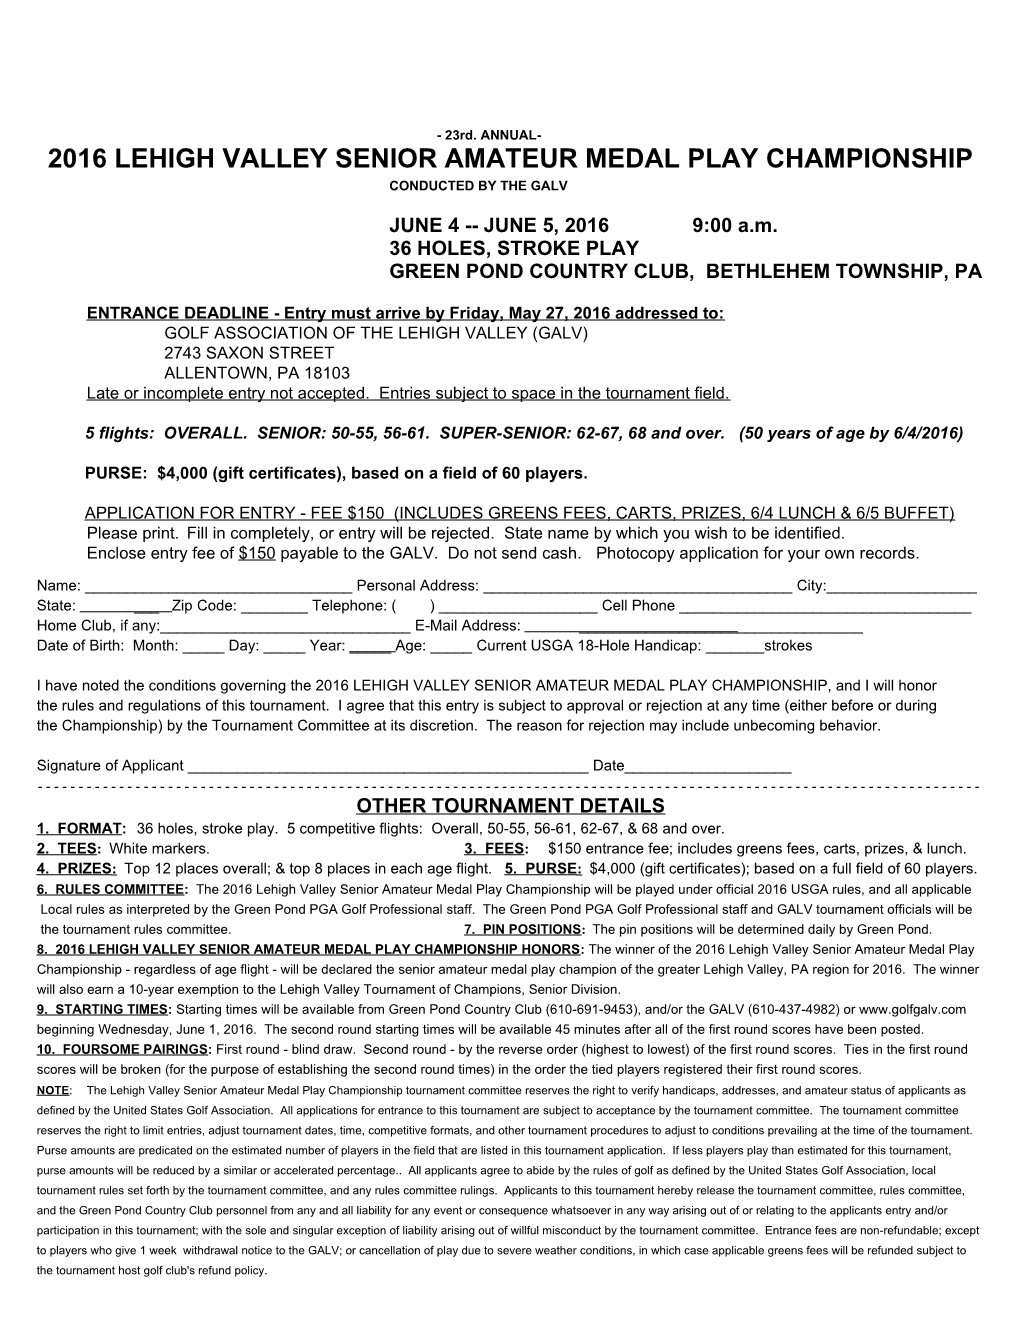 2016 Lehigh Valley Senior Amateur Medal Play Championship